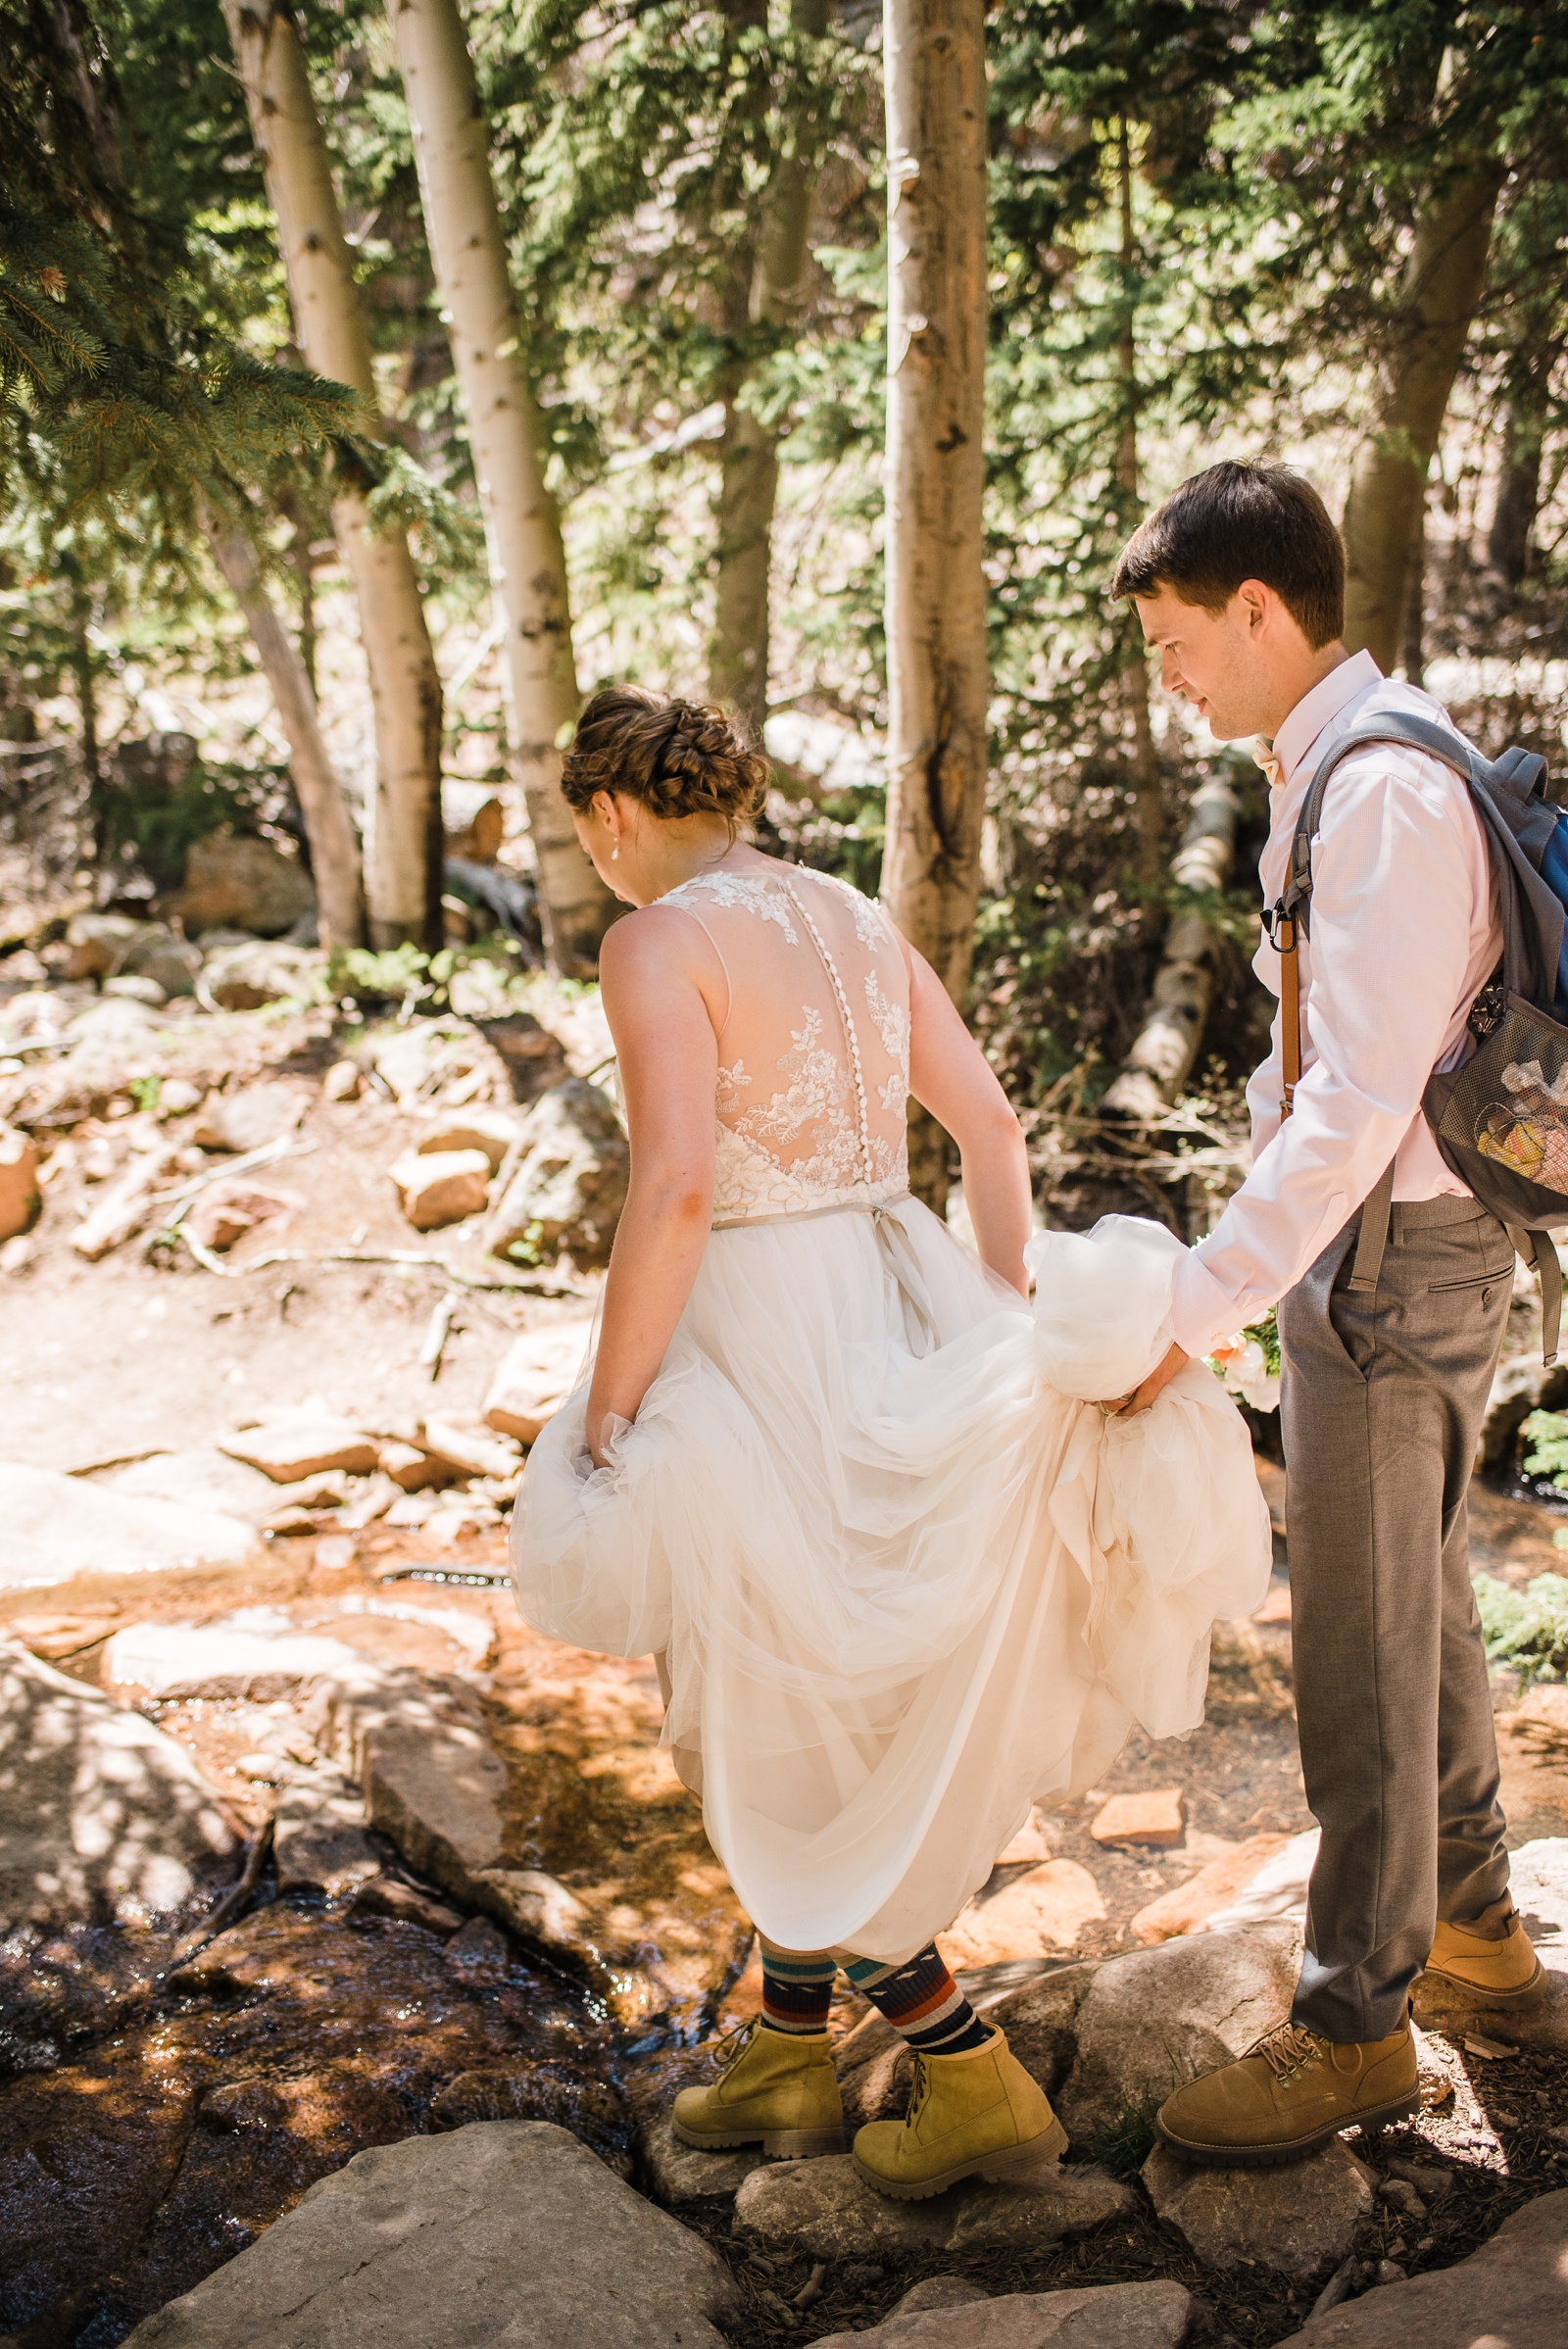 Groom holding bride's dress to cross stream.